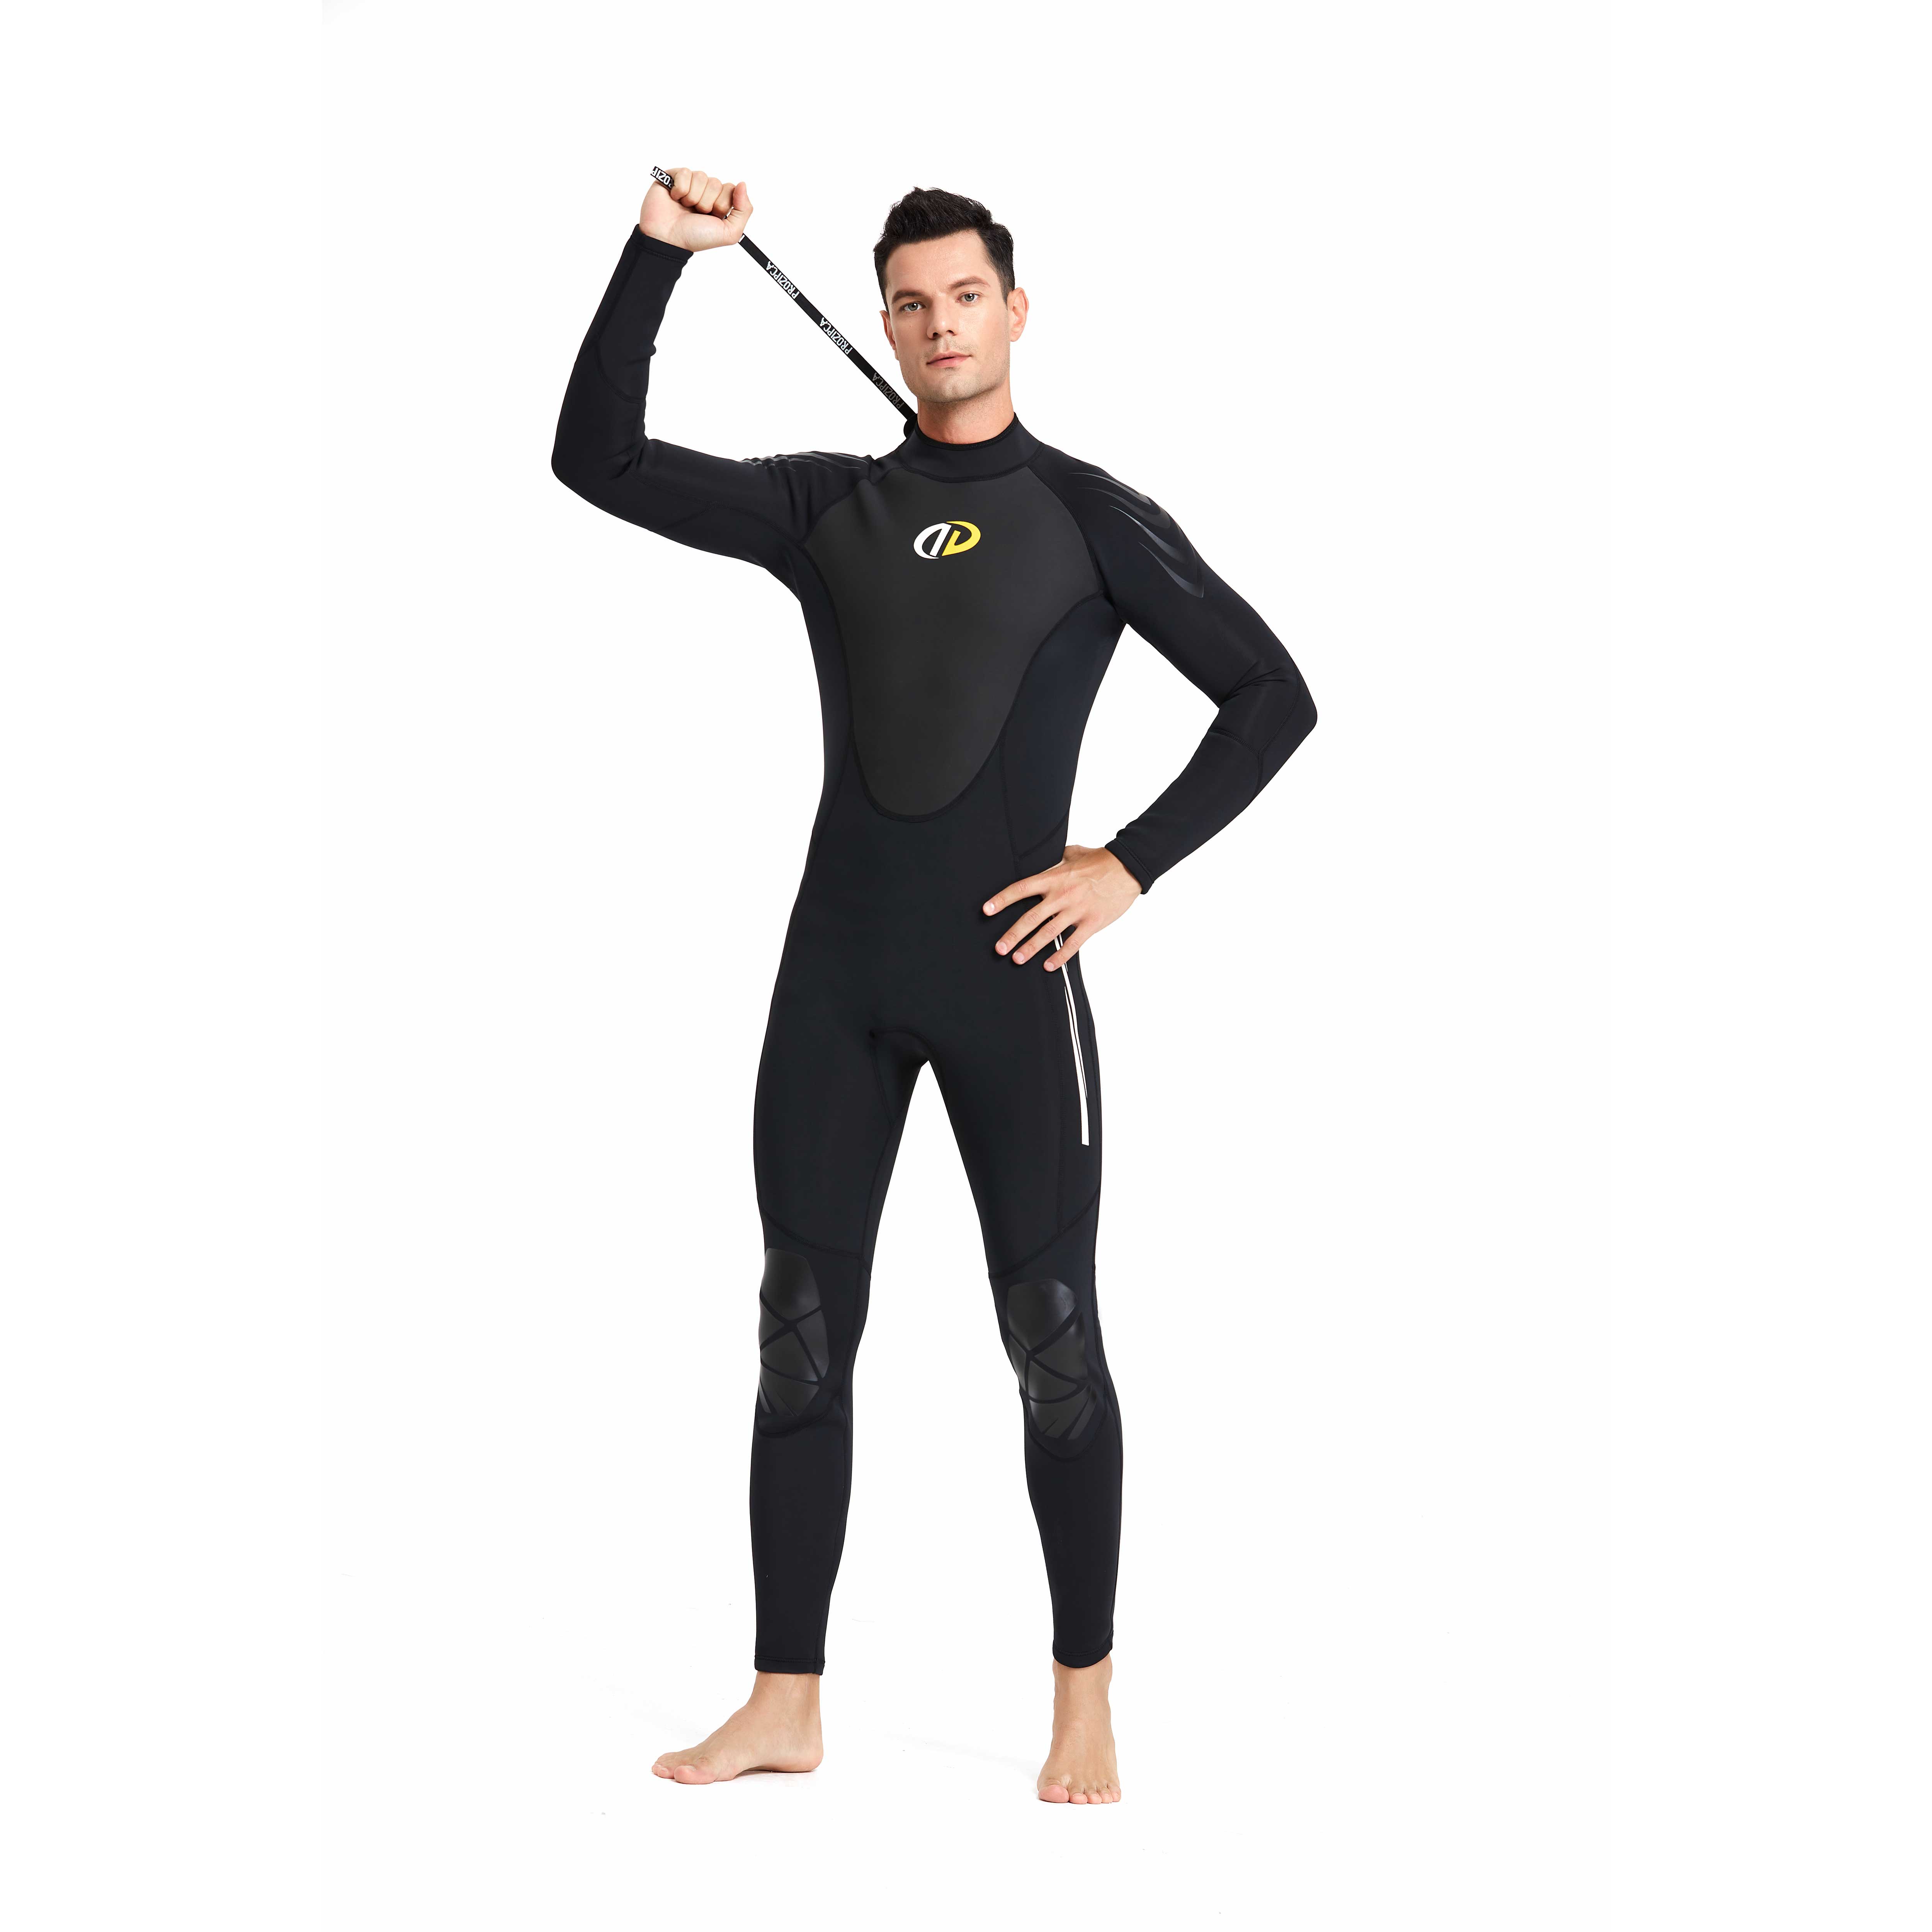 Customized Surf Suit Ultra Strech Full Body Tight Long Sleeve 3Mm Neoprene Men Snorkeling Diving Wetsuit